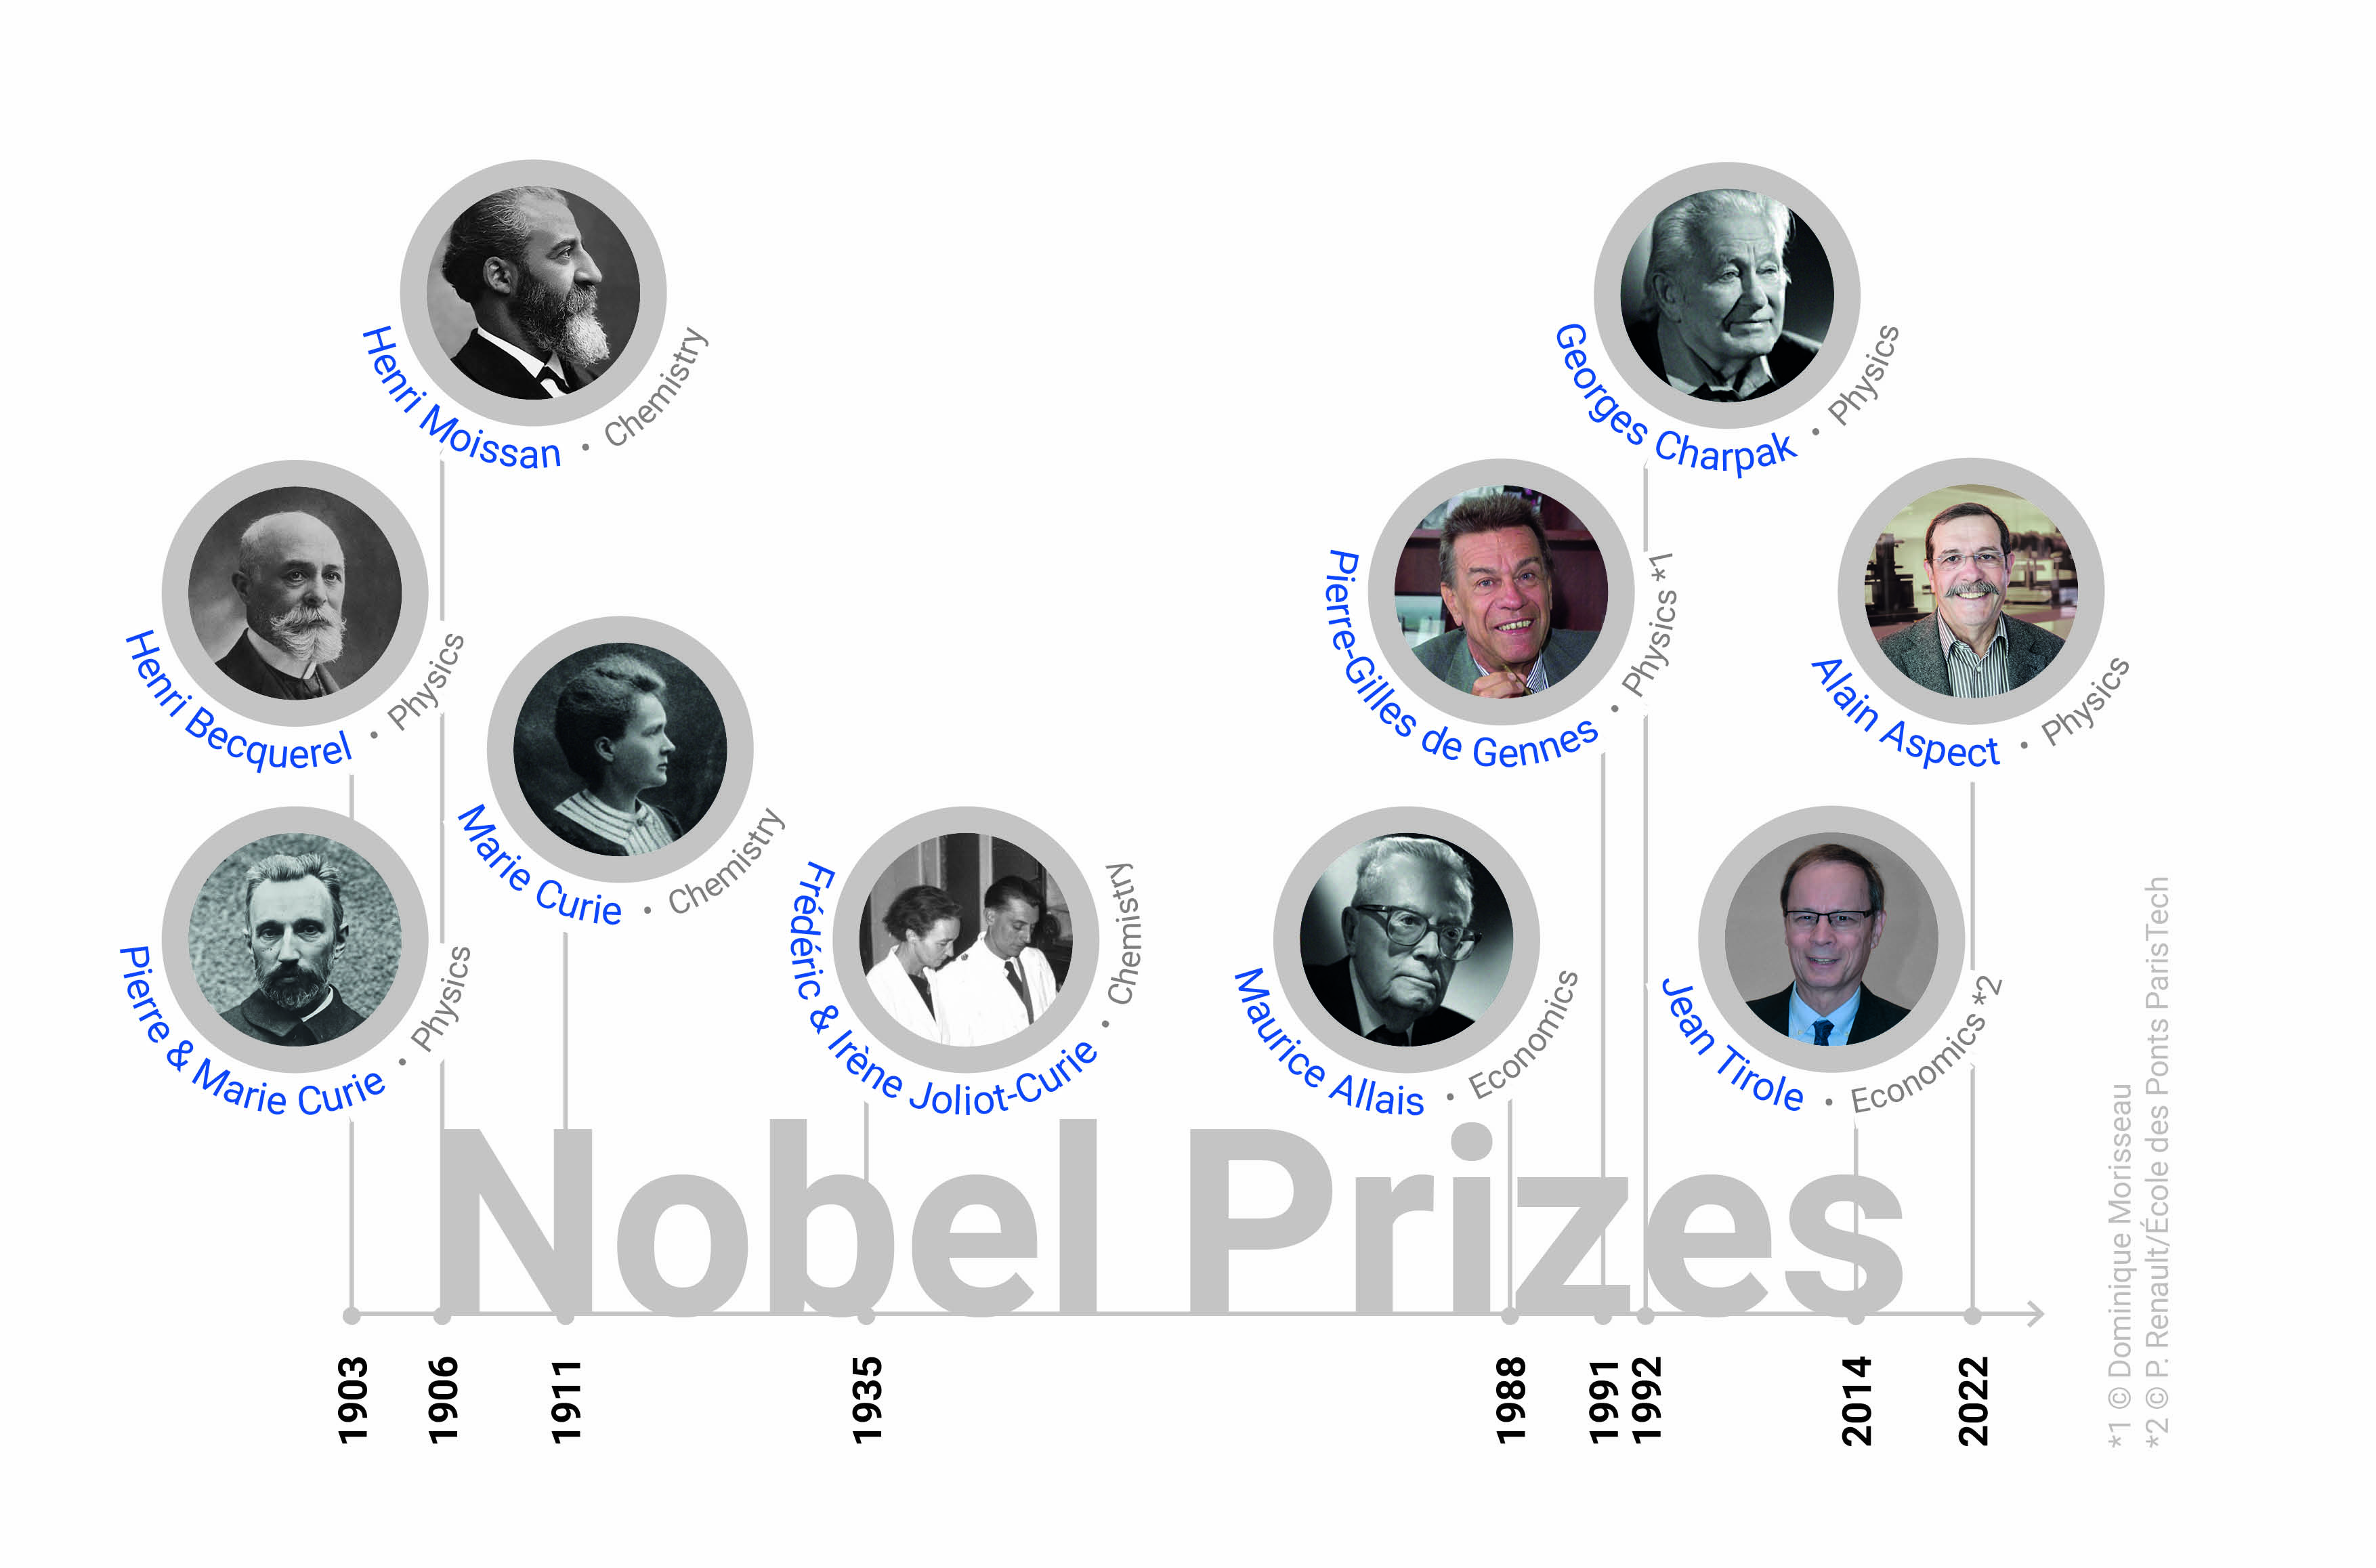 Nobel Prizes in ParisTech schools